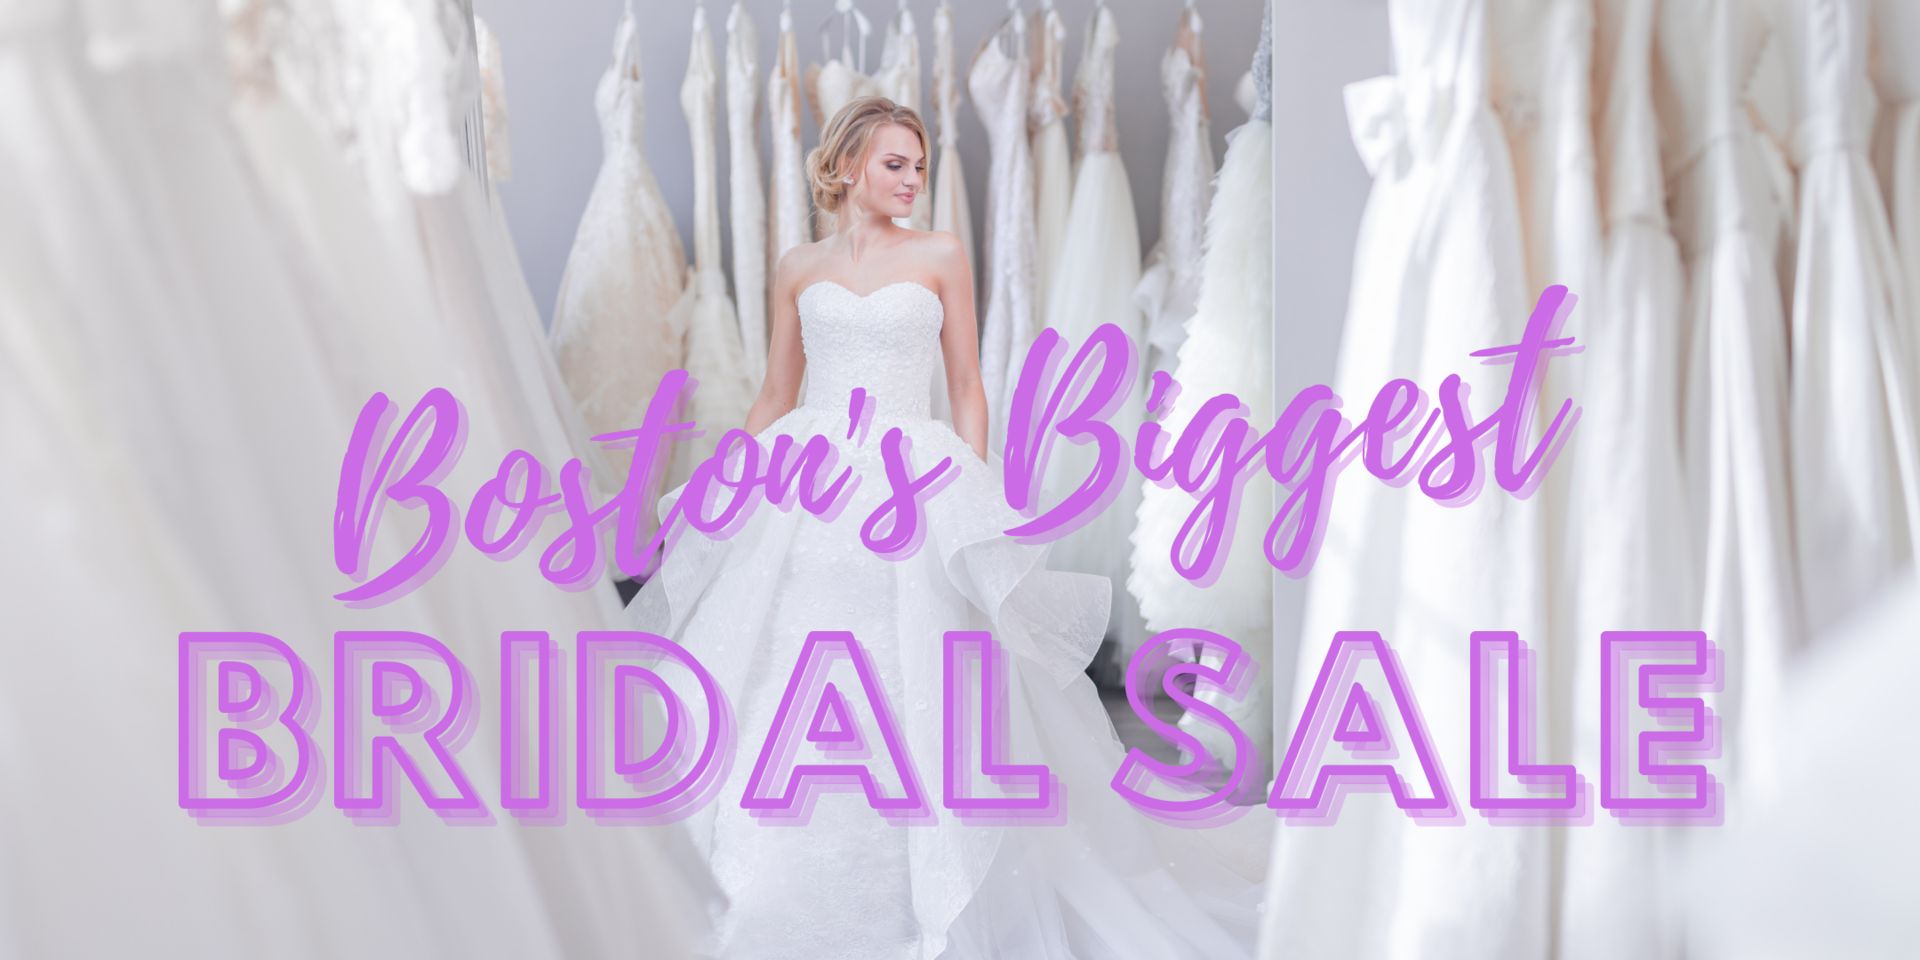 Boston's Biggest Bridal Sale - Wedding Dresses Starting at $99! June 10 & 11 at Wayside in Burlingto, Burlington, Massachusetts, United States